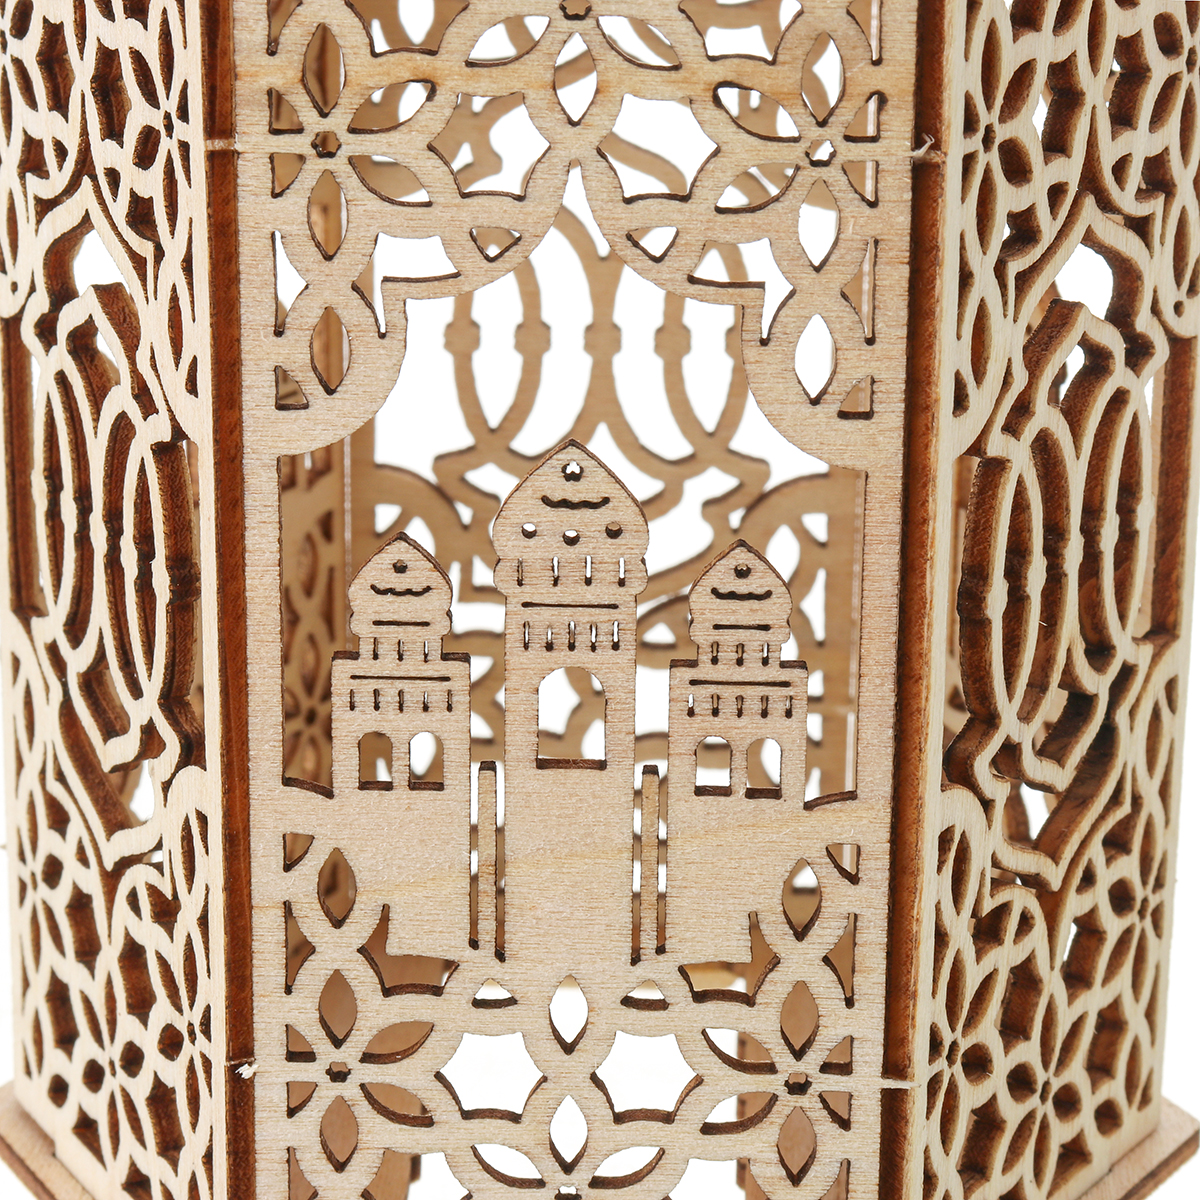 Wooden-Palace-LED-Night-Light-DIY-Eid-Mubarak-Ramadan-Party-Decoration-Ornament-Gifts-1677194-5